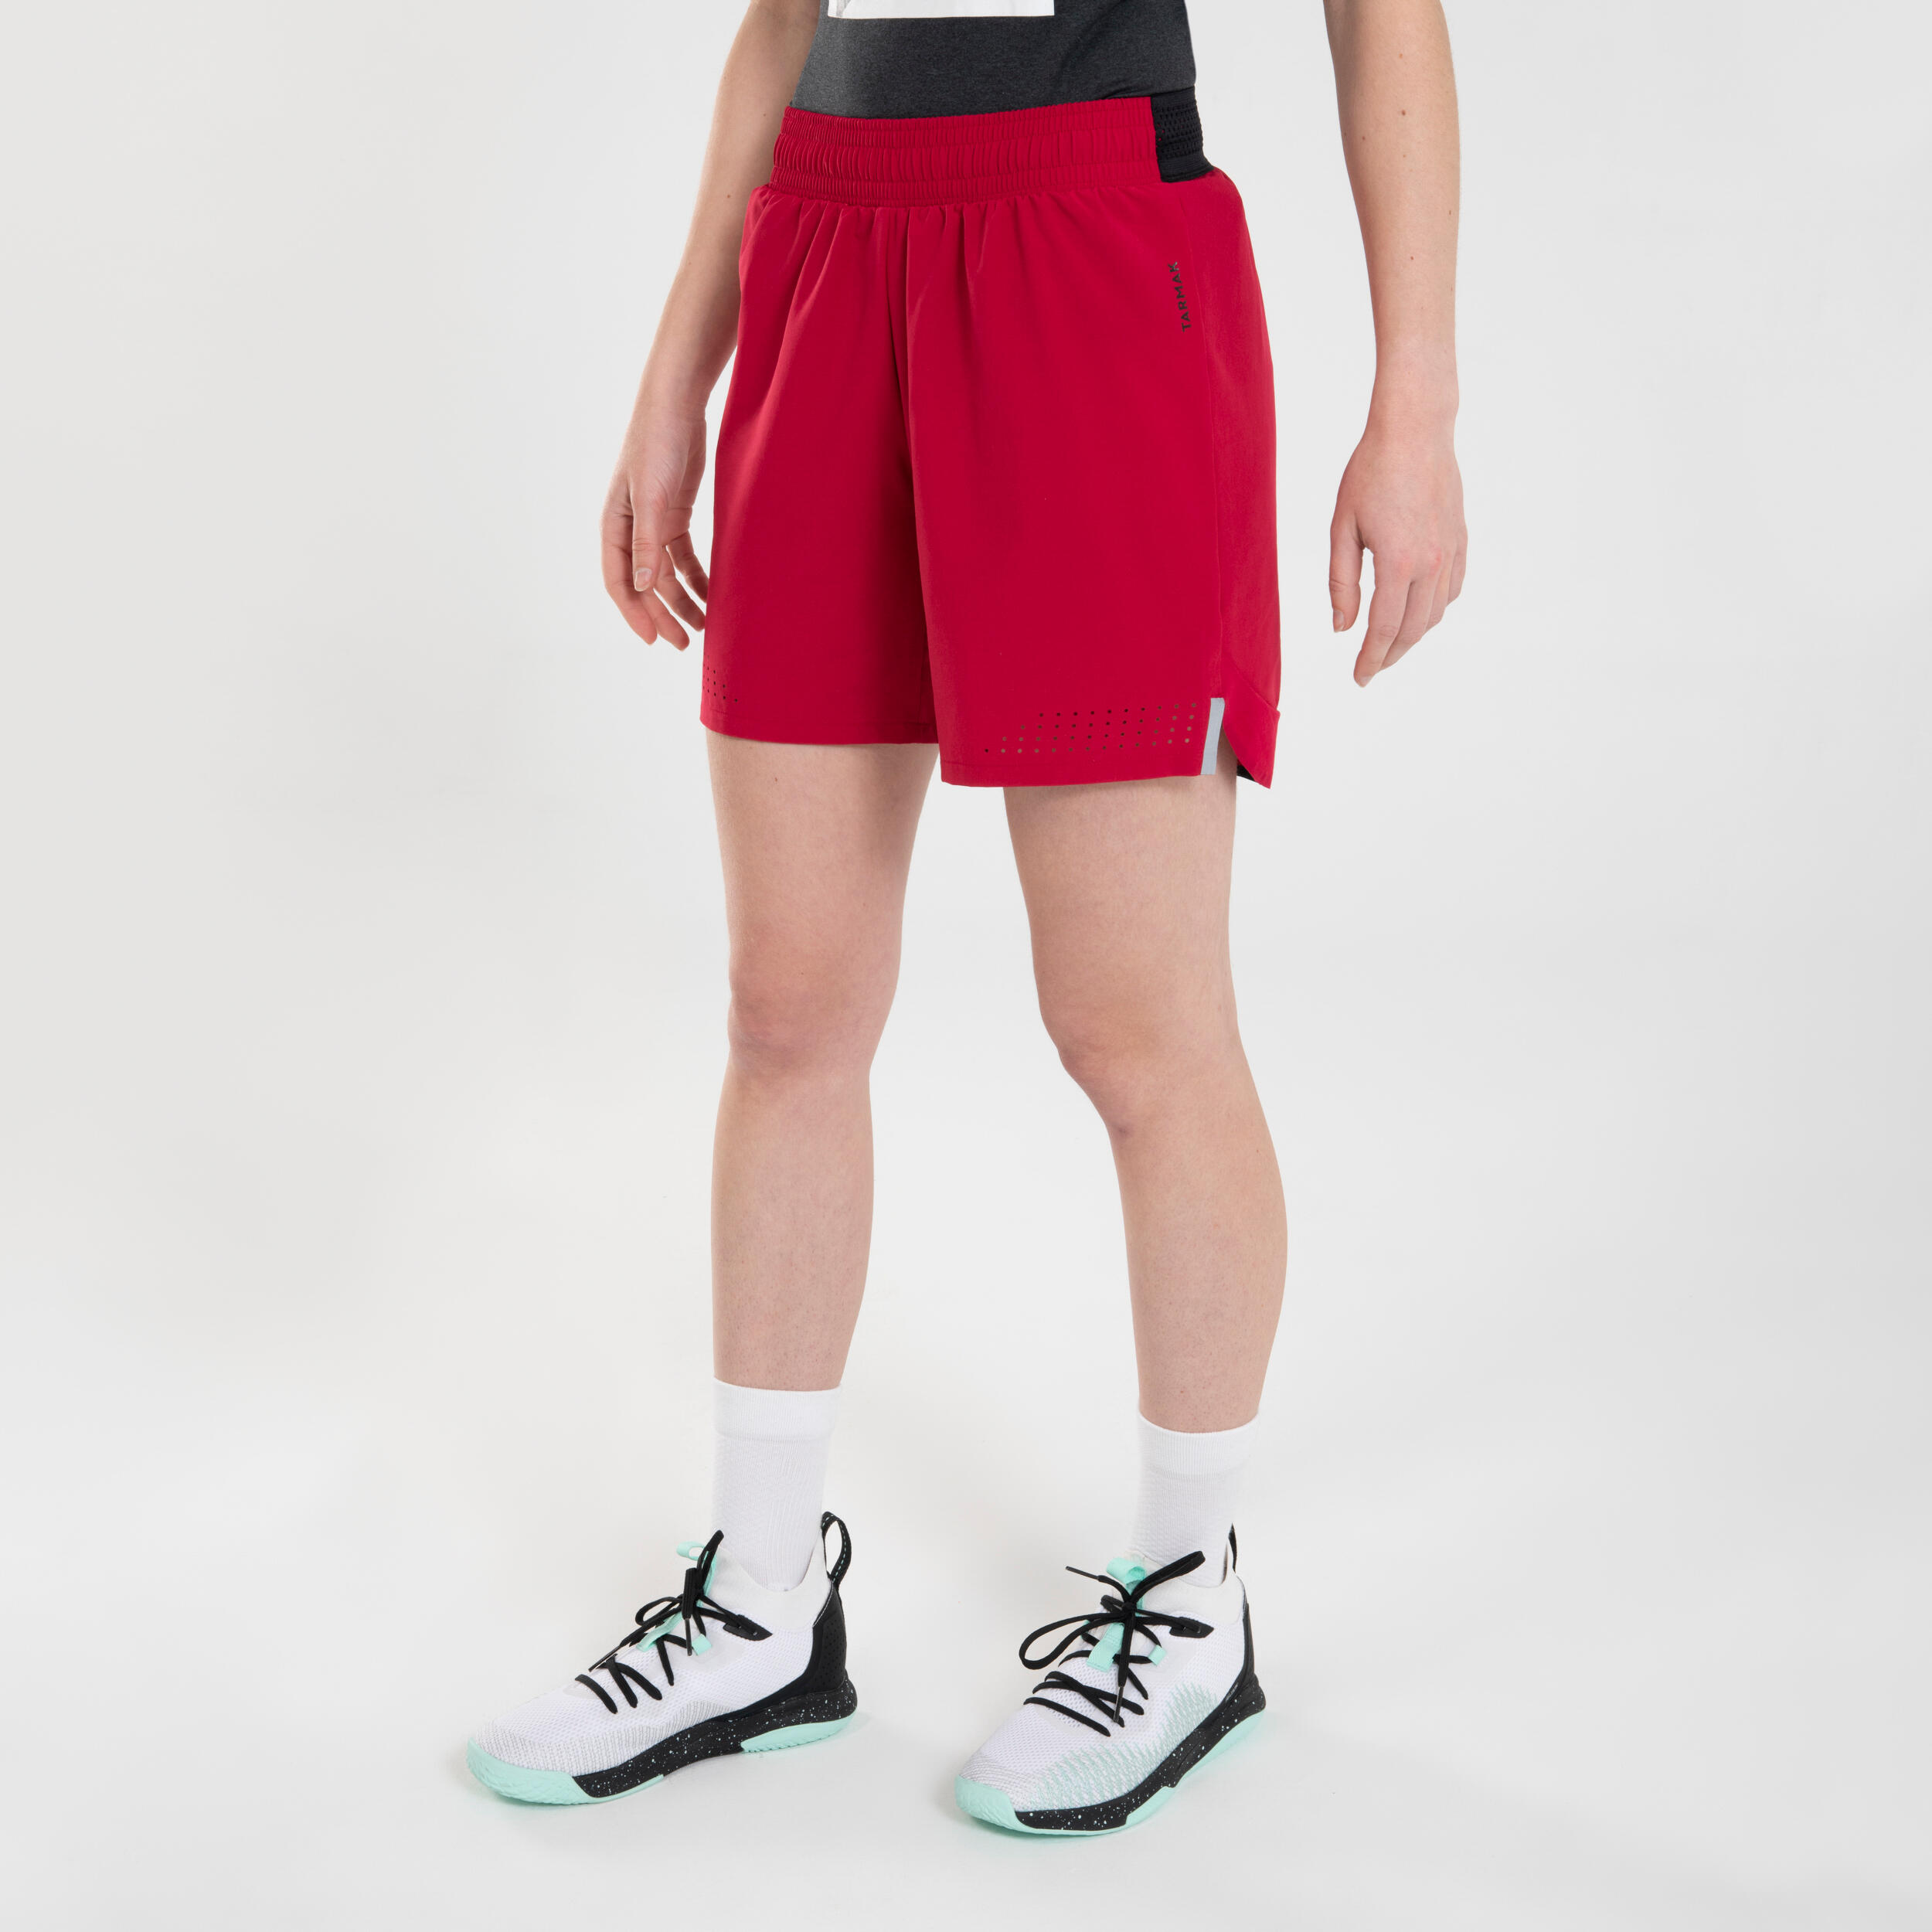 Buy Women'S Basketball Shorts Sh500 - Black Online